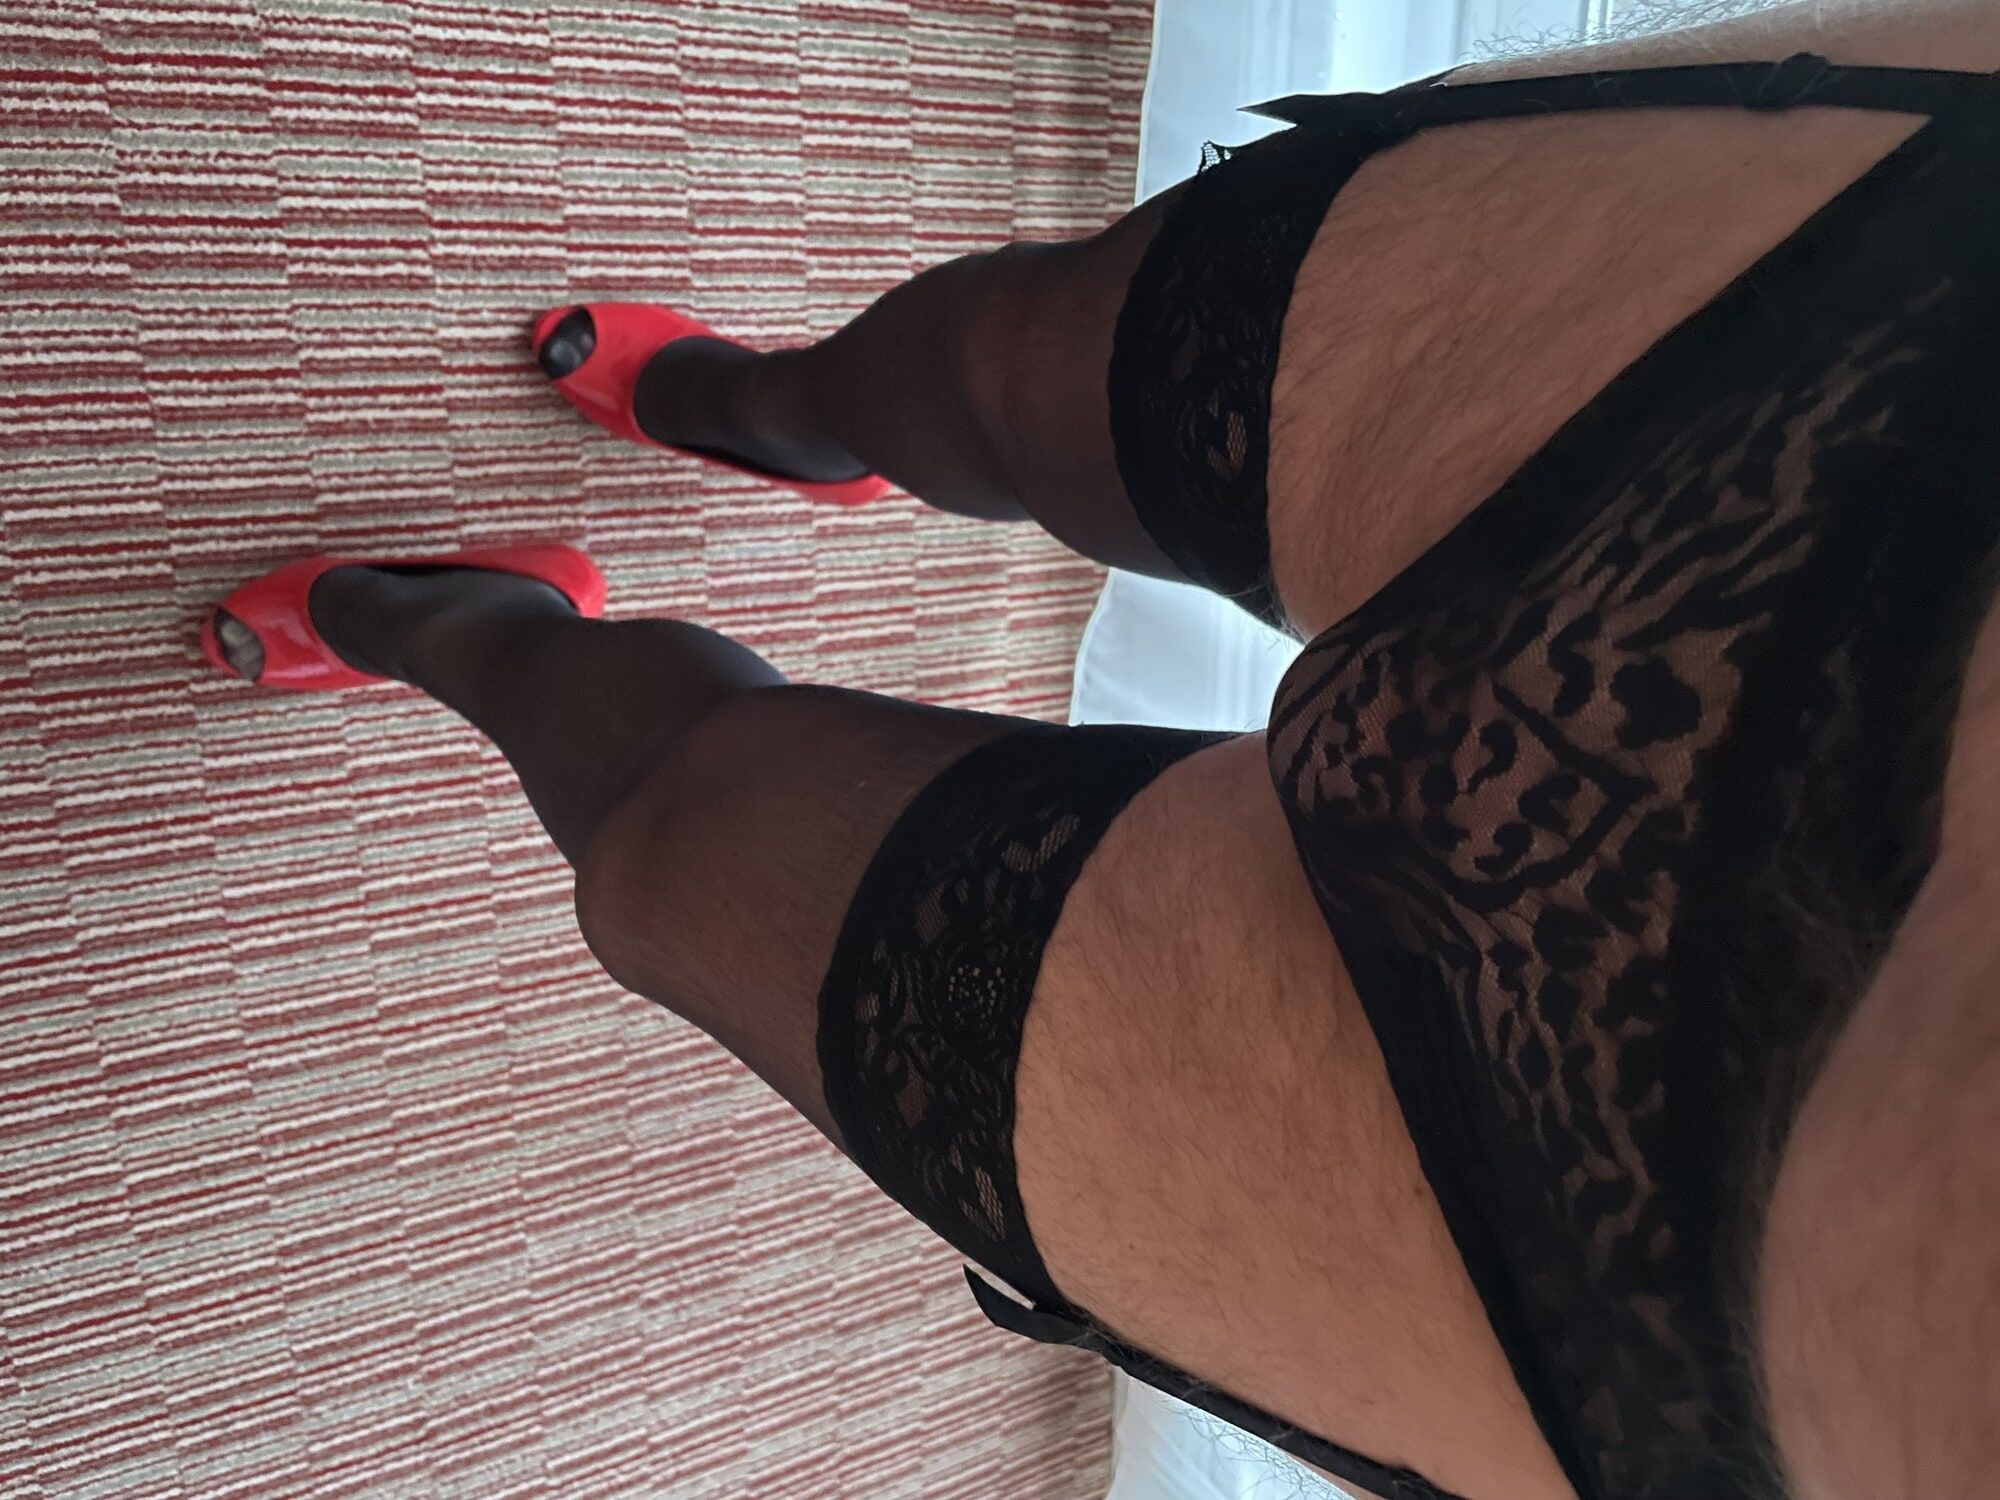 Enjoying the sensual feel of stockings and heels 👠  #2